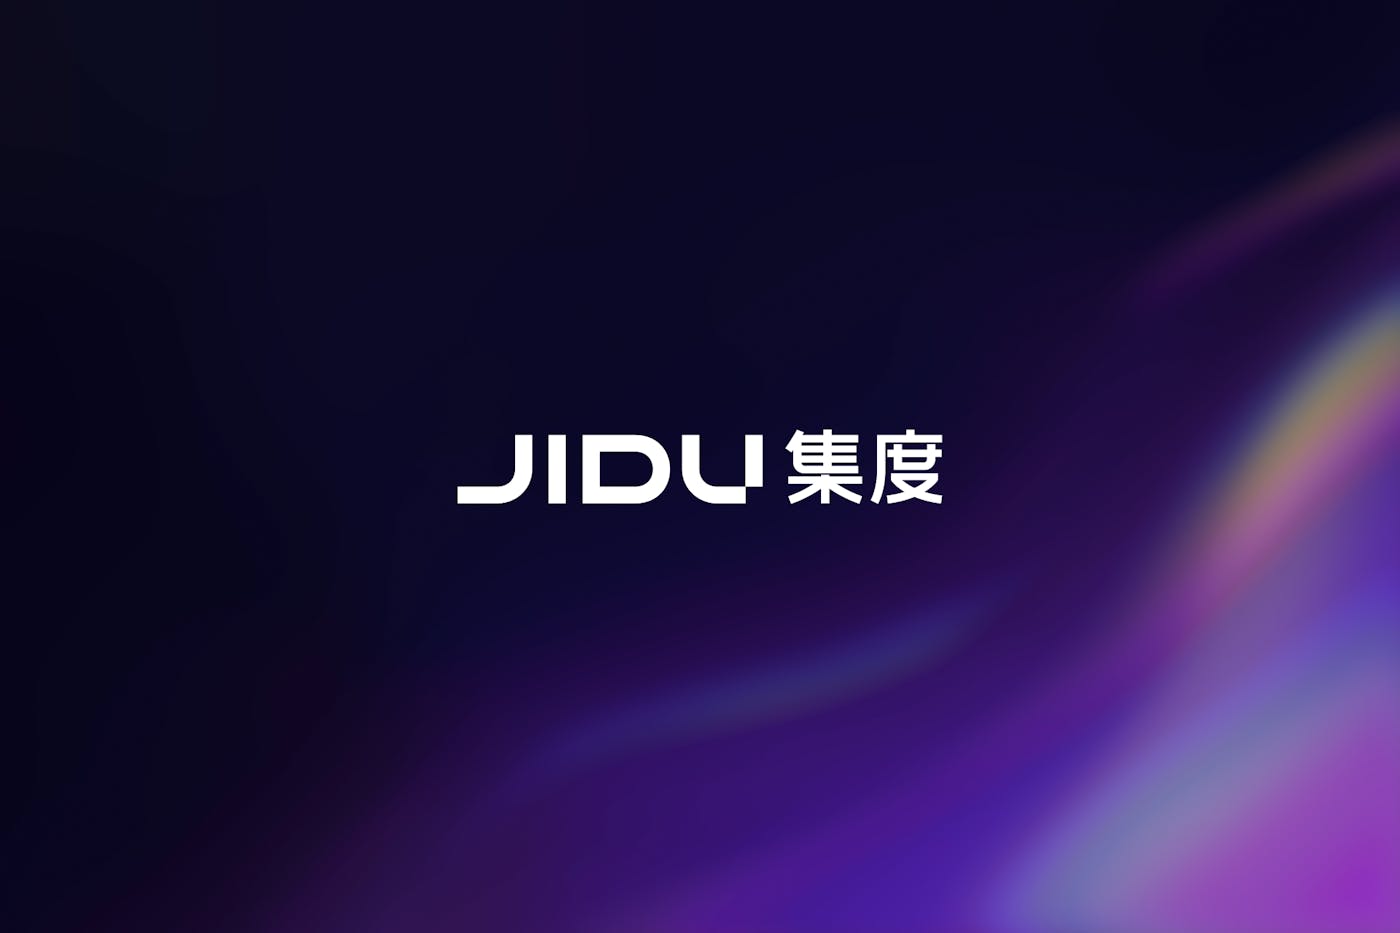 Jidu logo 03